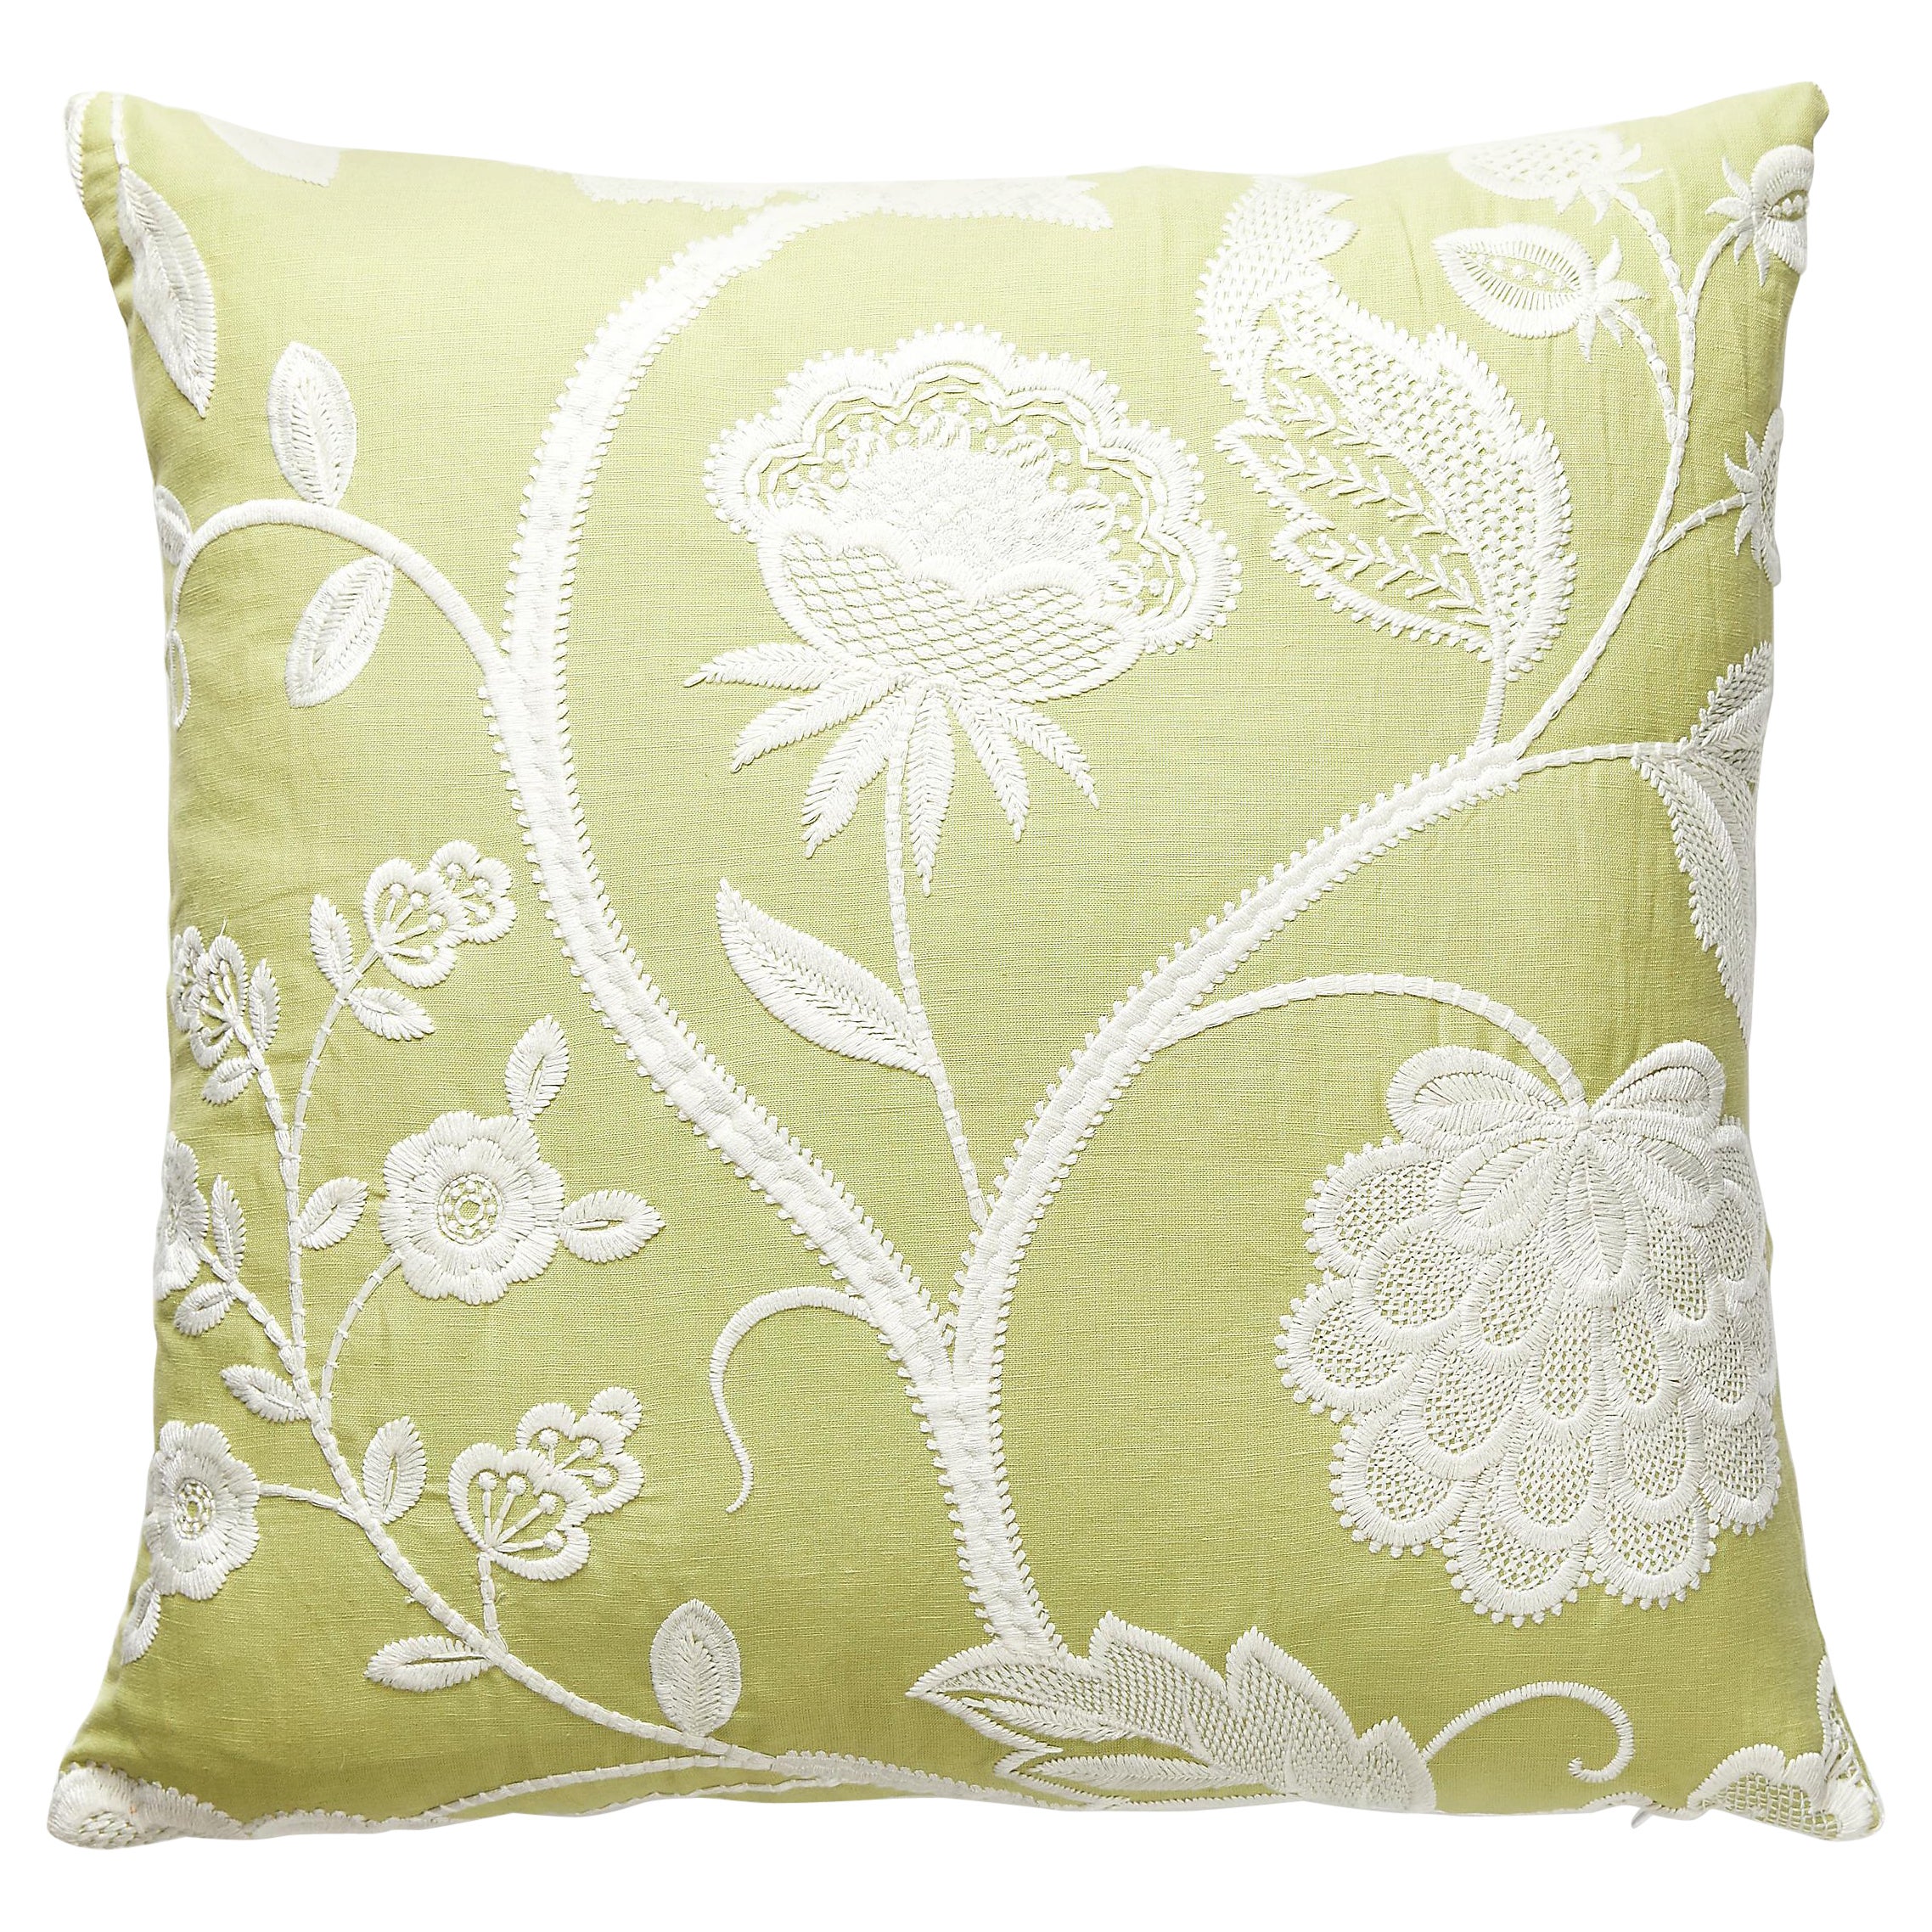 Kensington Embroidery Pillow